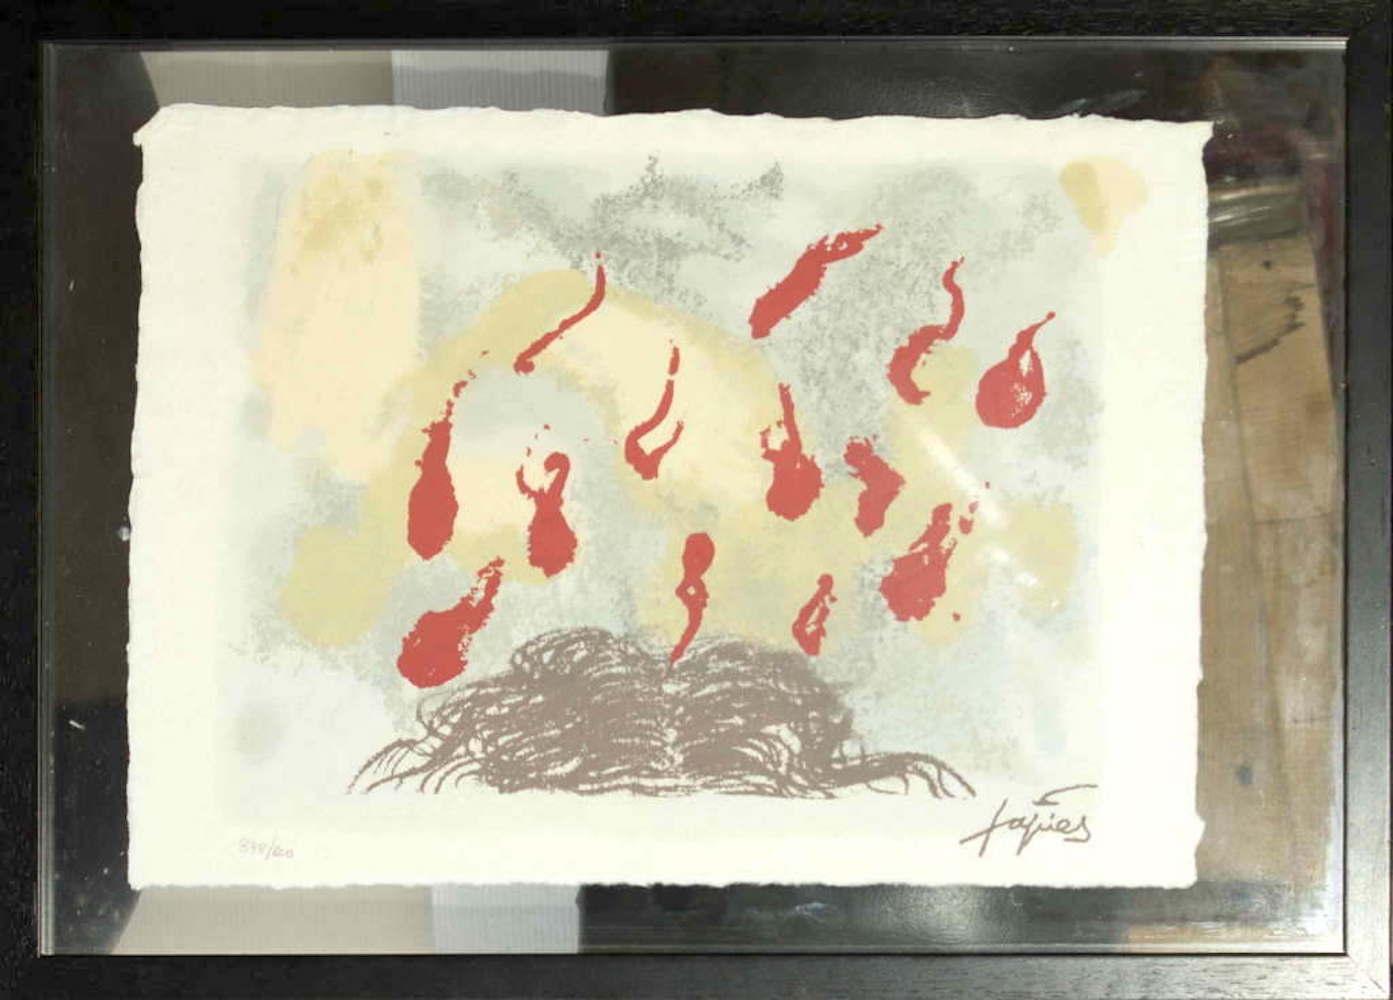 Cabellos y llamas - Original Lithograph After Antoni Tapies - 1987 - Print by Antoni Tàpies